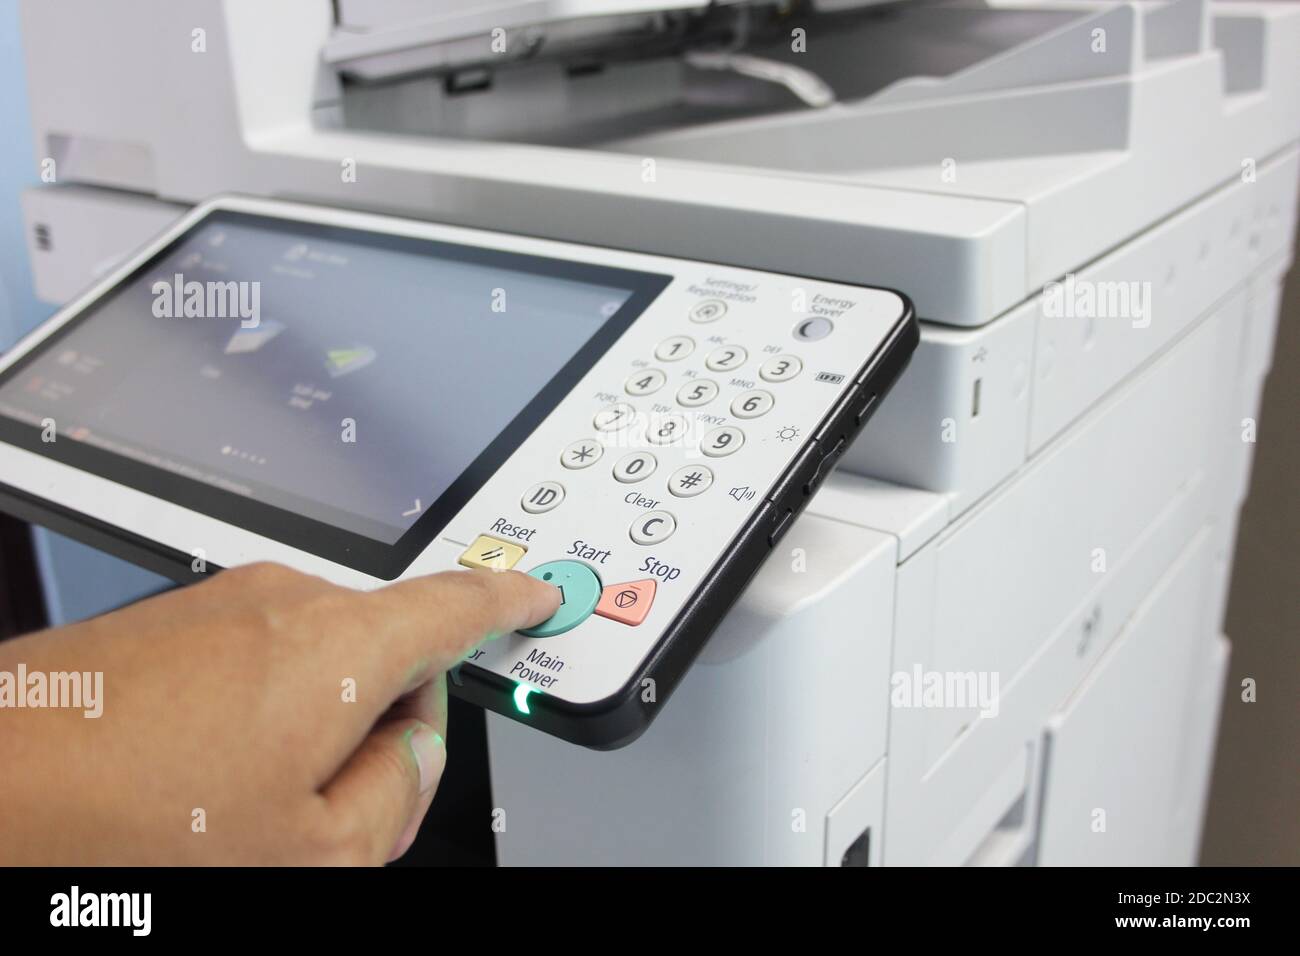 Bussiness man Hand press button on panel of printer, printer scanner laser office copy machine supplies start concept. Stock Photo